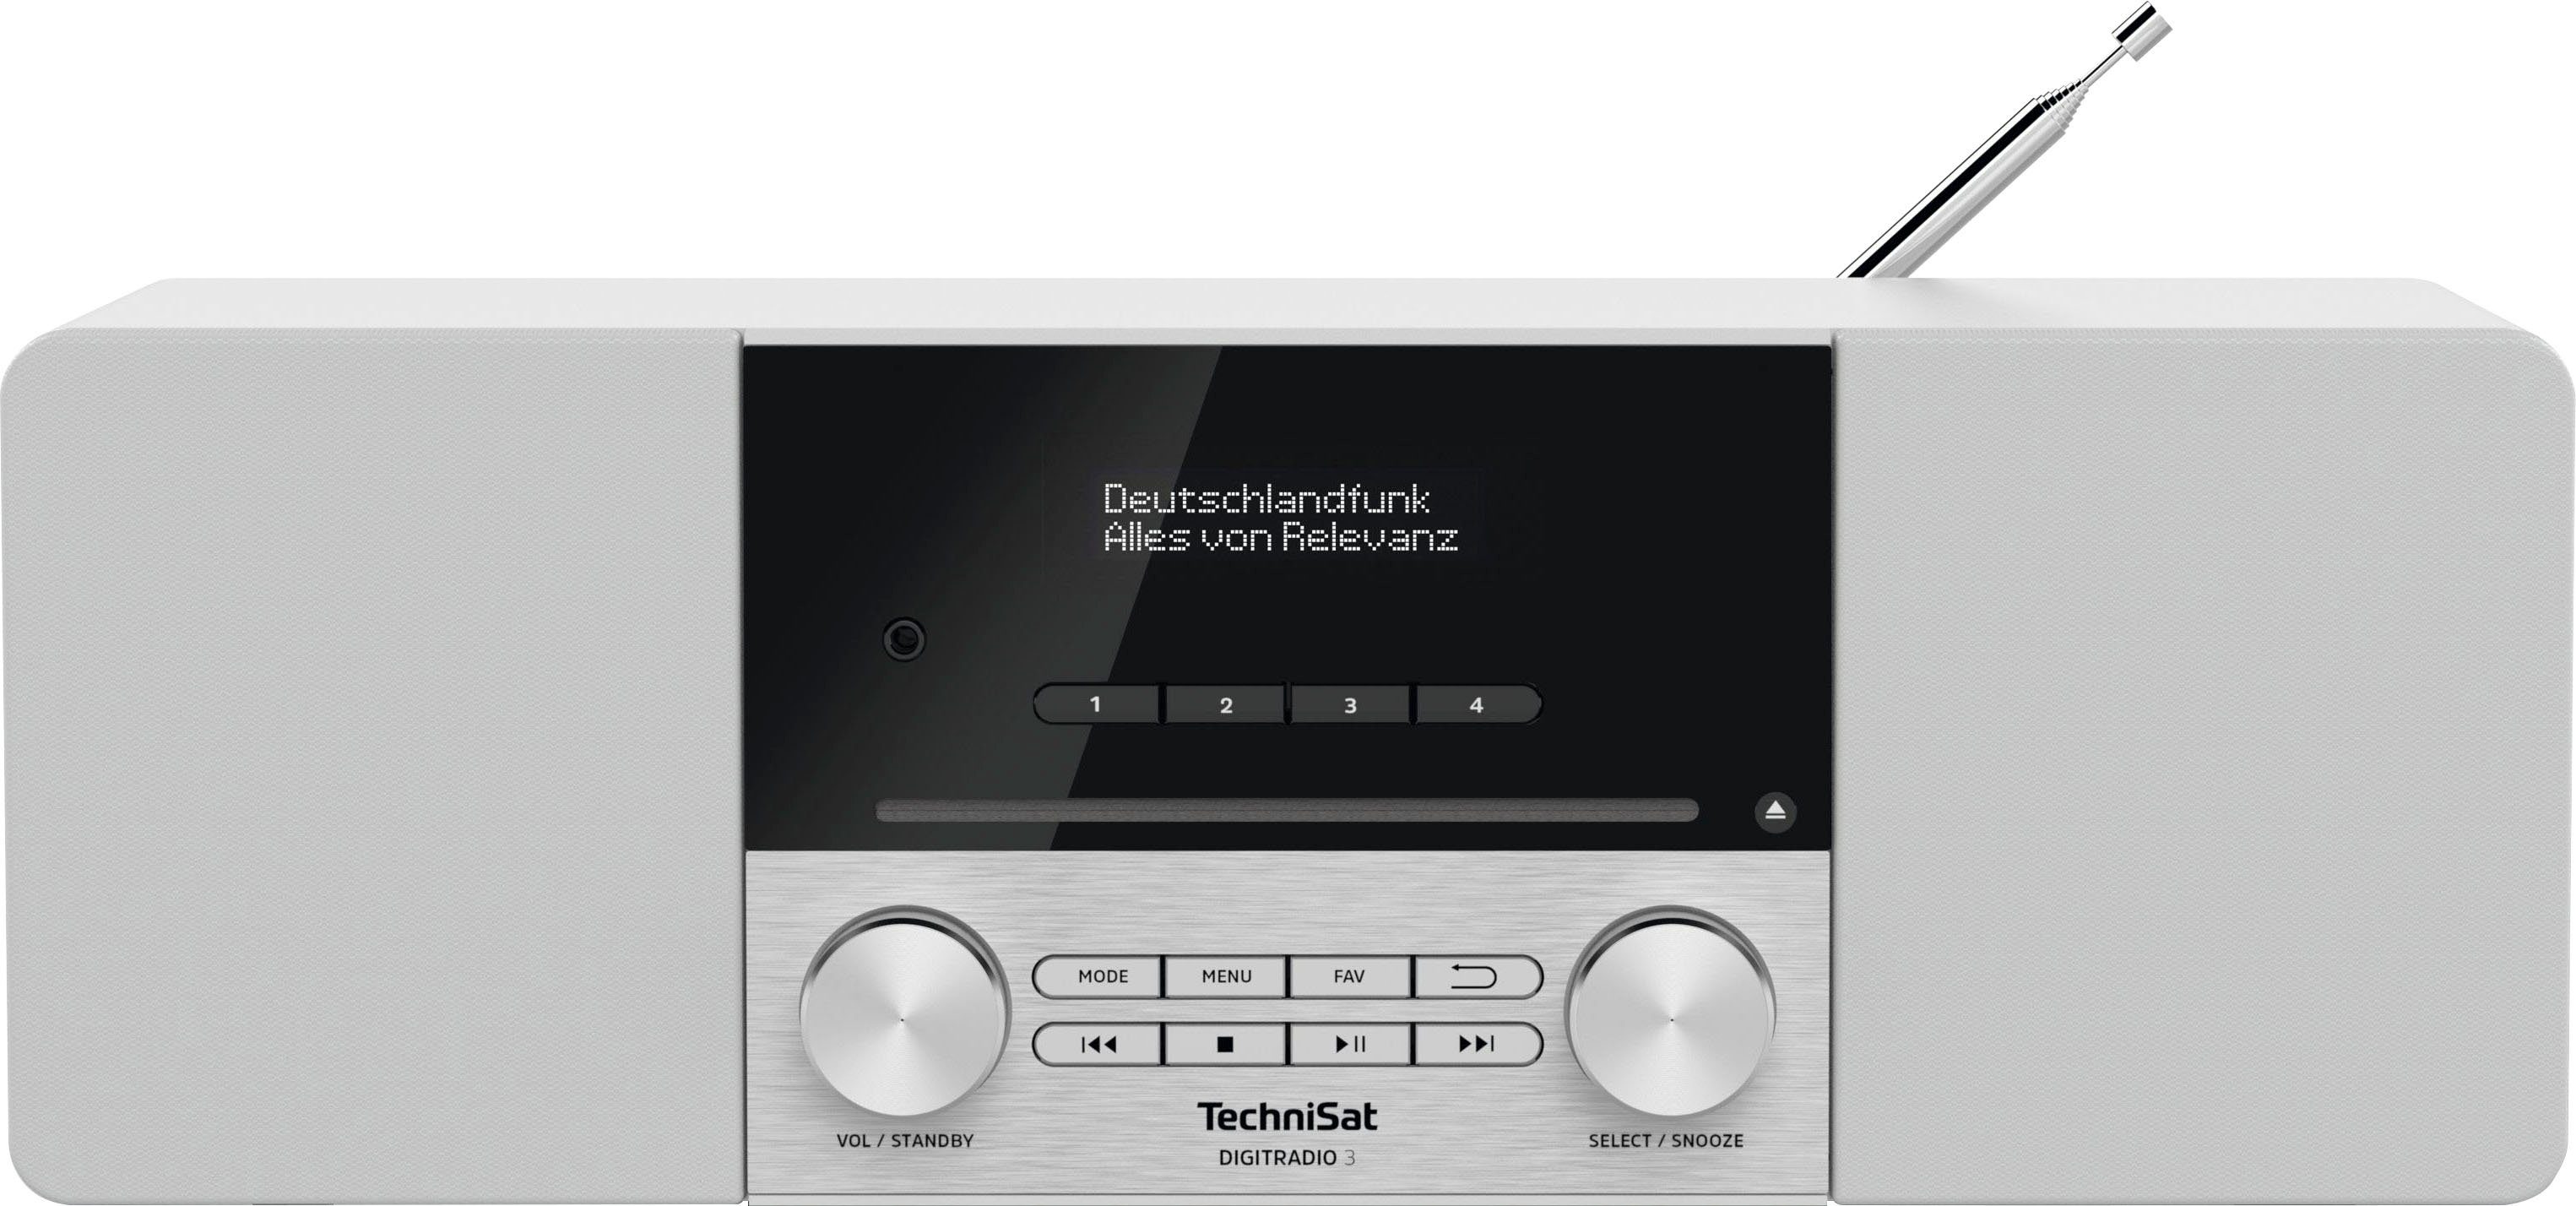 TechniSat DIGITRADIO 3 Digitalradio (DAB) RDS, Germany) UKW in W, CD-Player, weiß 20 Made mit (DAB), (Digitalradio